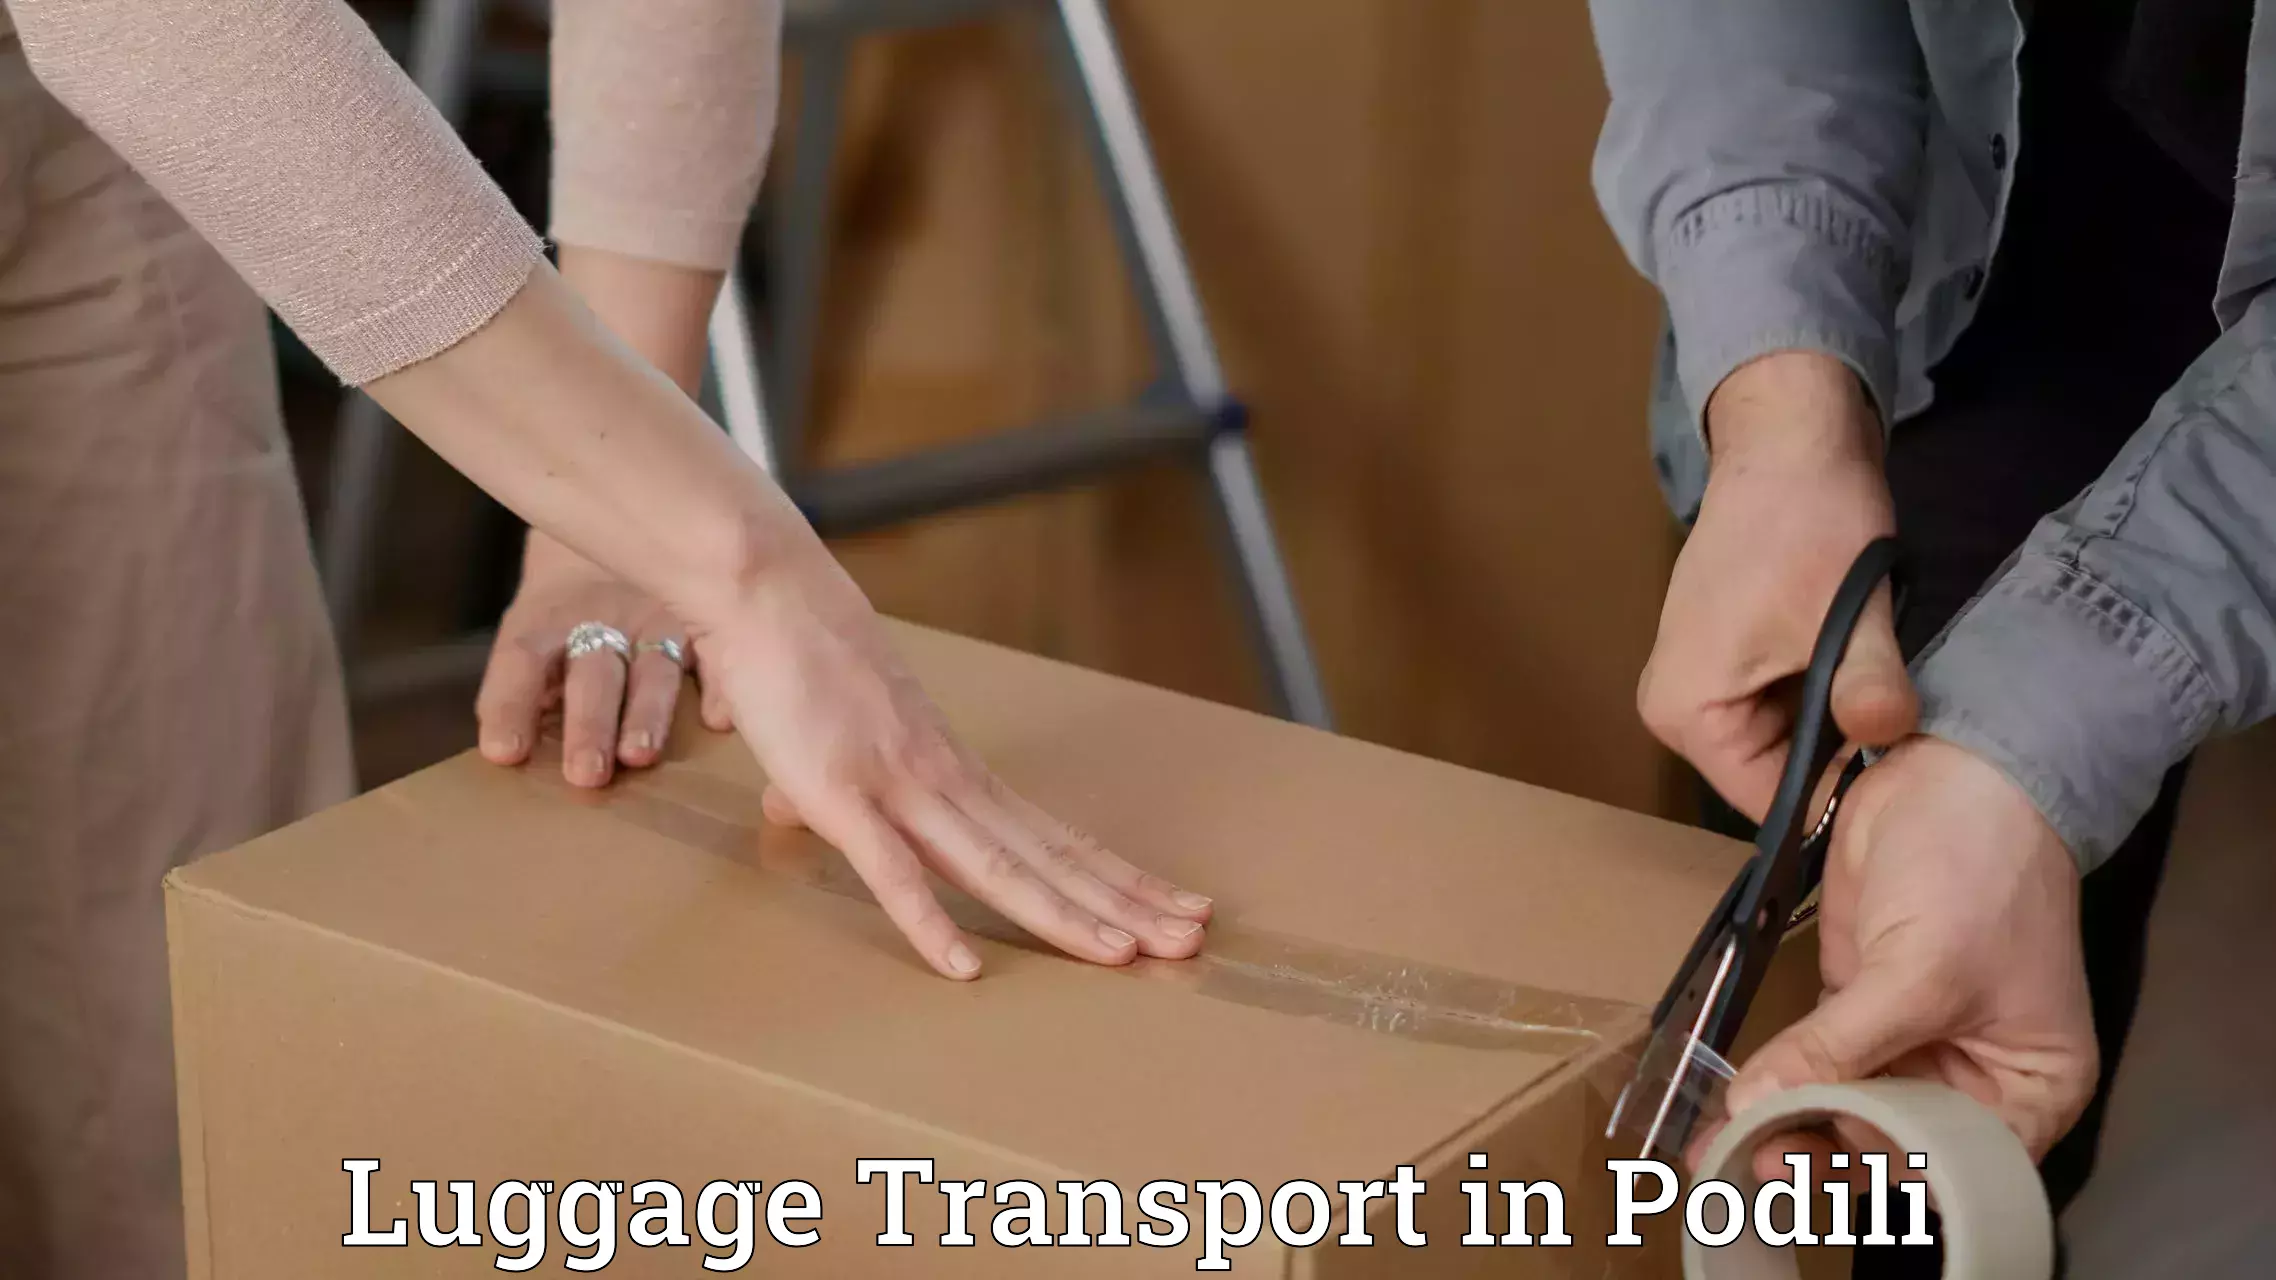 Baggage relocation service in Podili